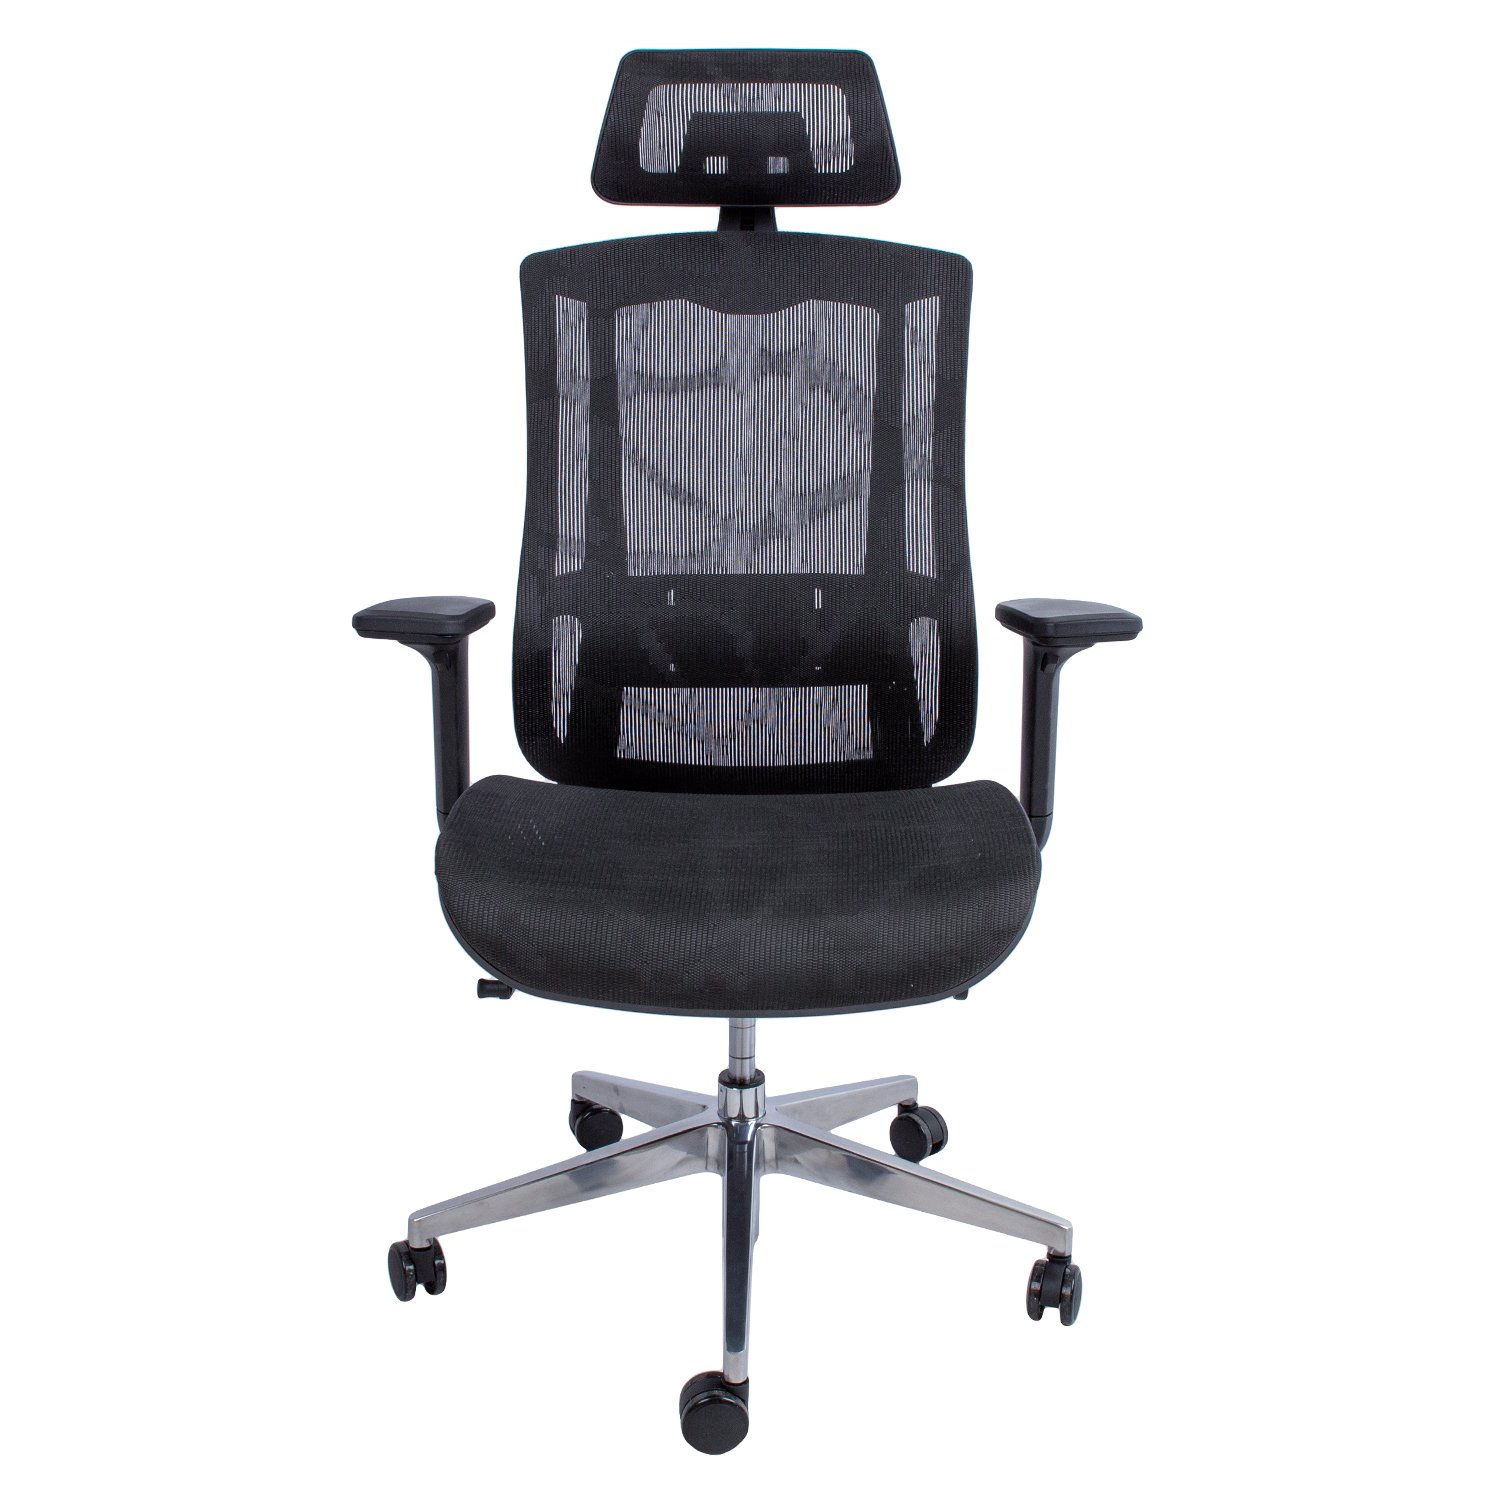 Biuro kėdė FLEX, 70x70xH116-126 cm, juoda